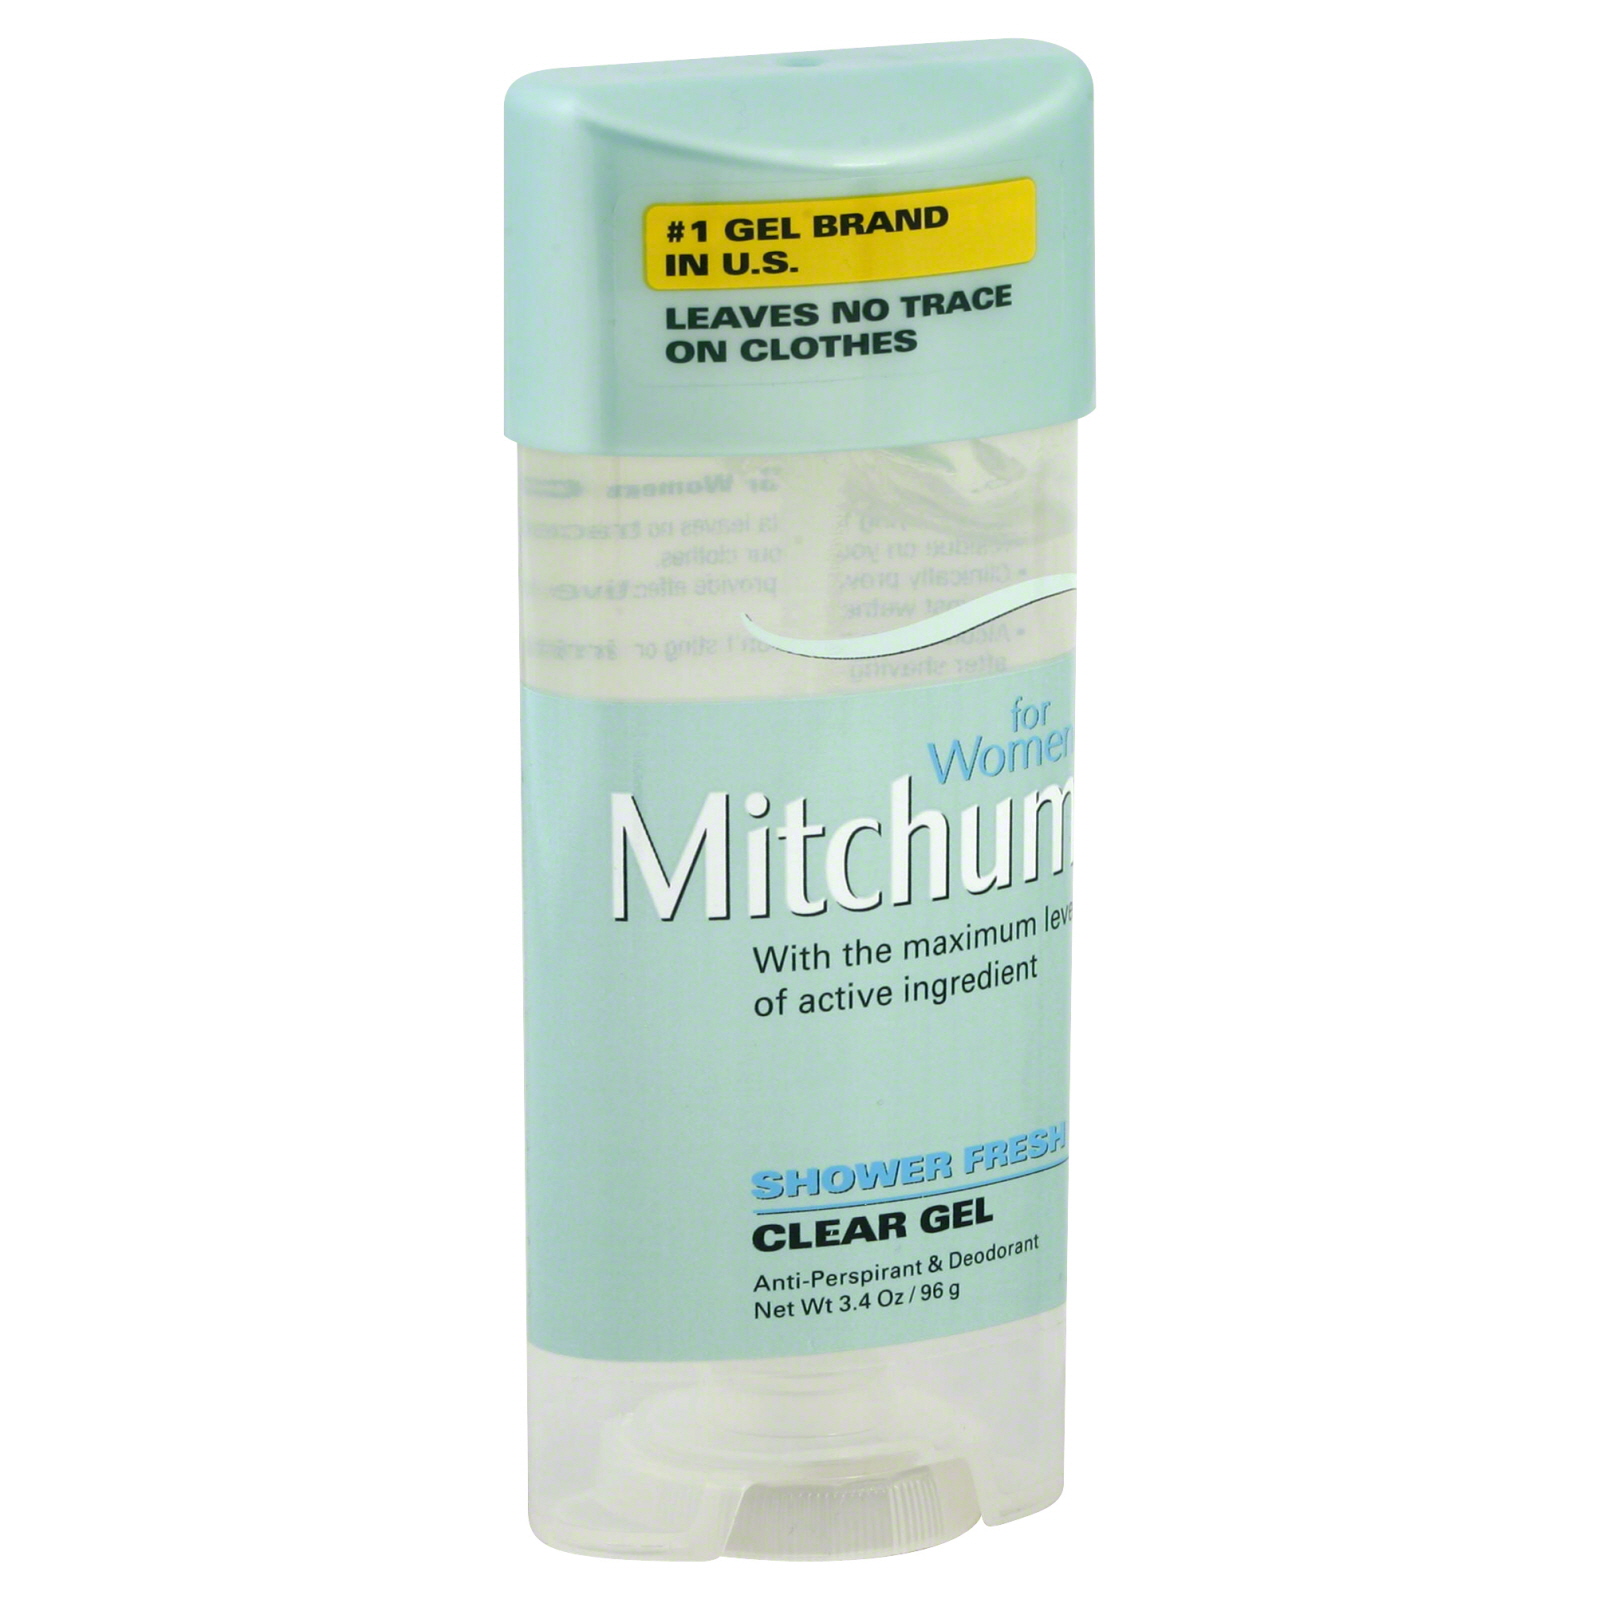 Mitchum For Women Anti-Perspirant & Deodorant, Clear Gel, Shower Fresh, 3.4 oz (96 g)